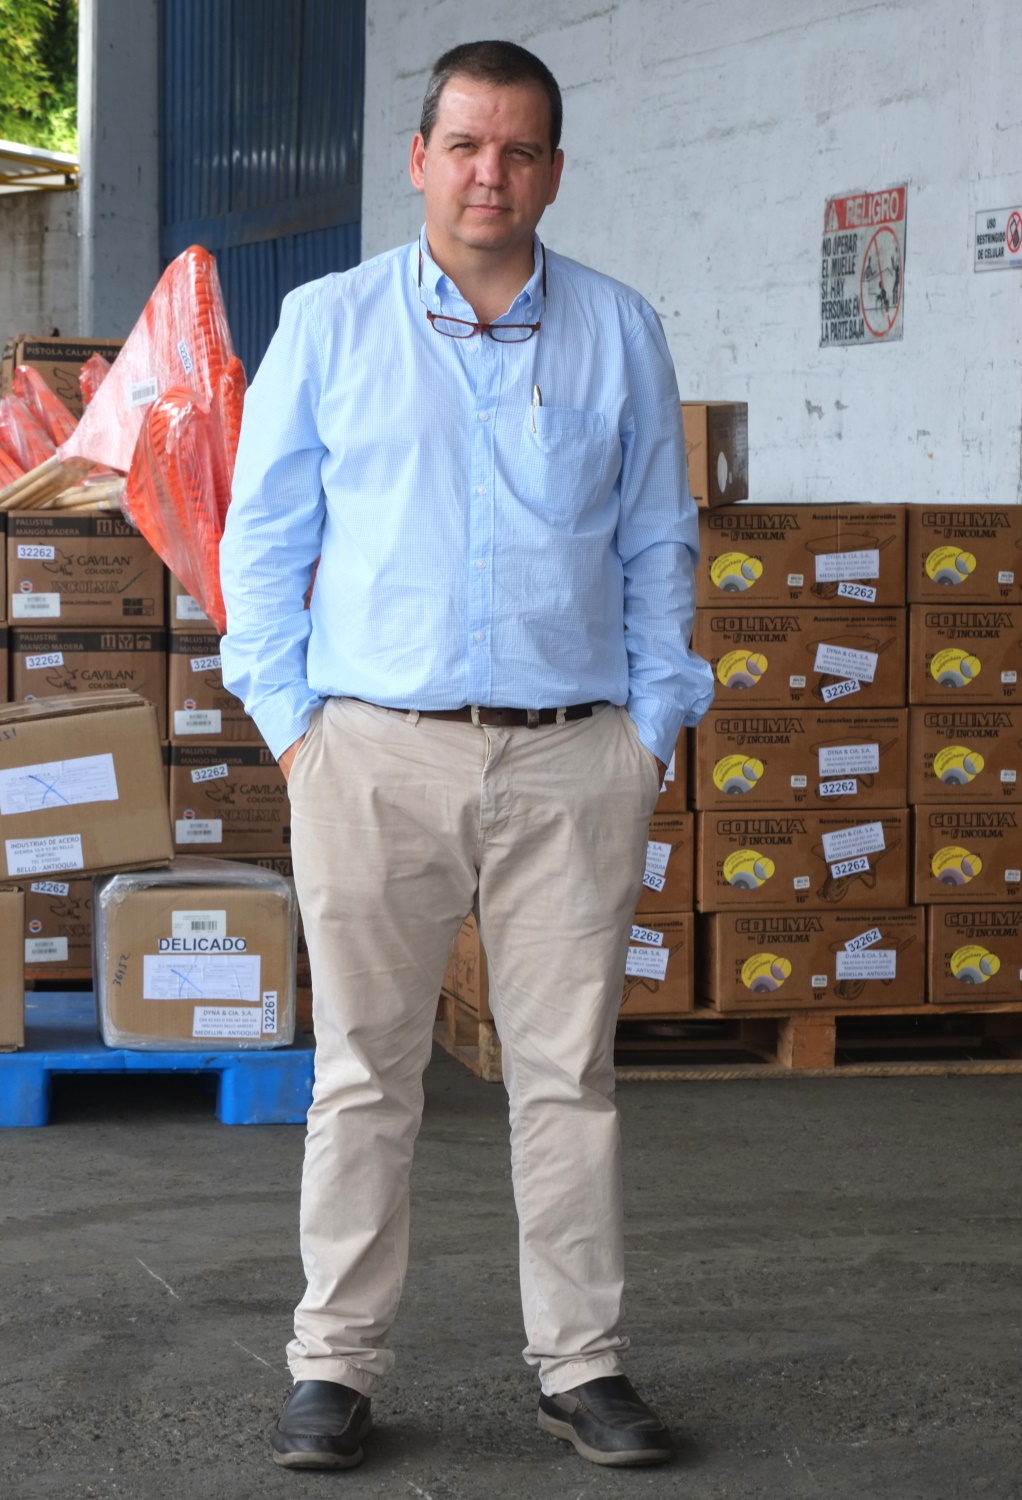 Manfuakturen-Blog: Javier Henao leitet den Export der Macheten-Manufaktur INCOLMA (Foto: Martin Specht)